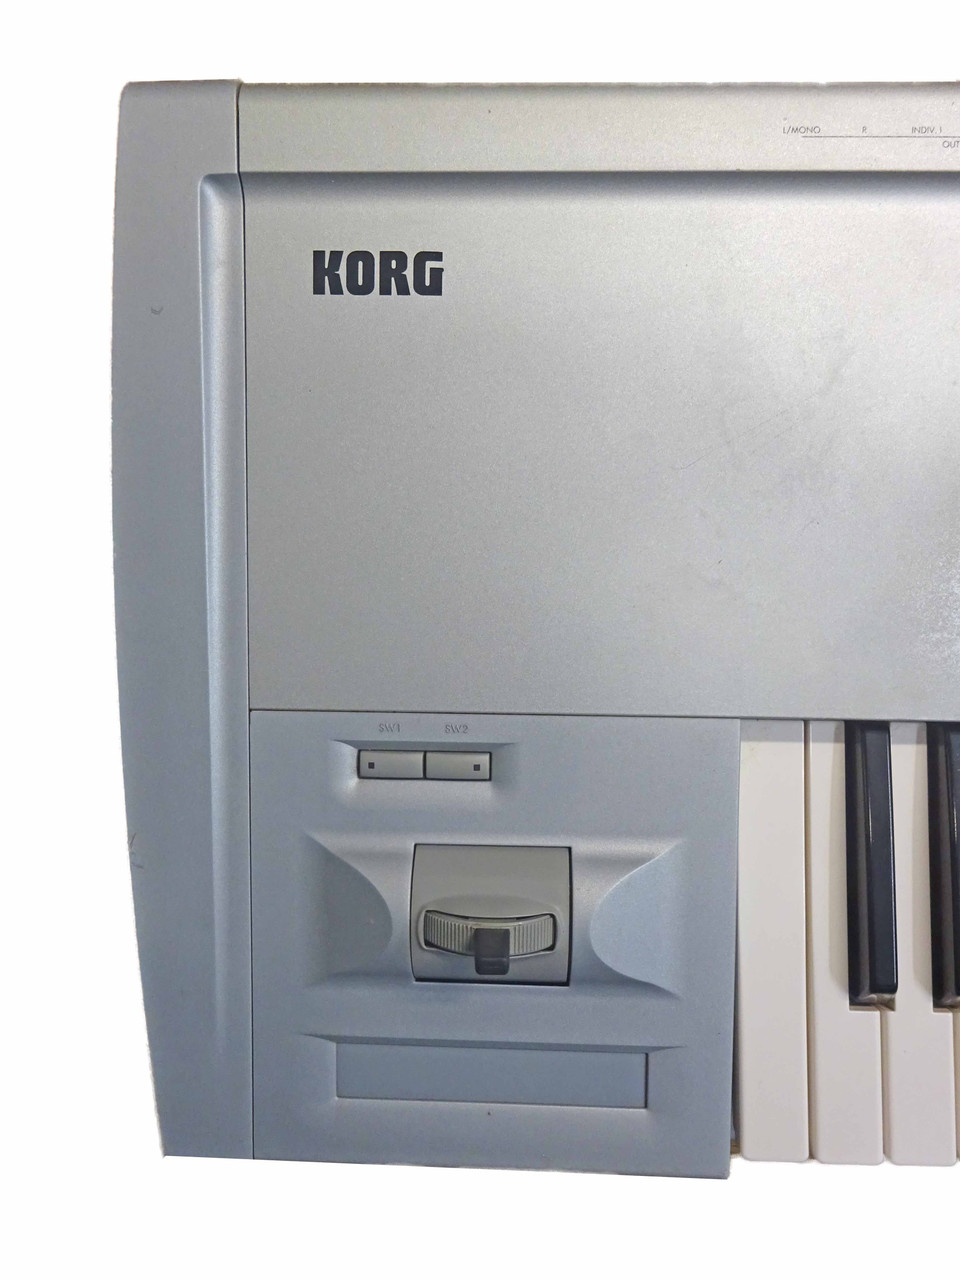 Korg Triton Pro Music Workstation